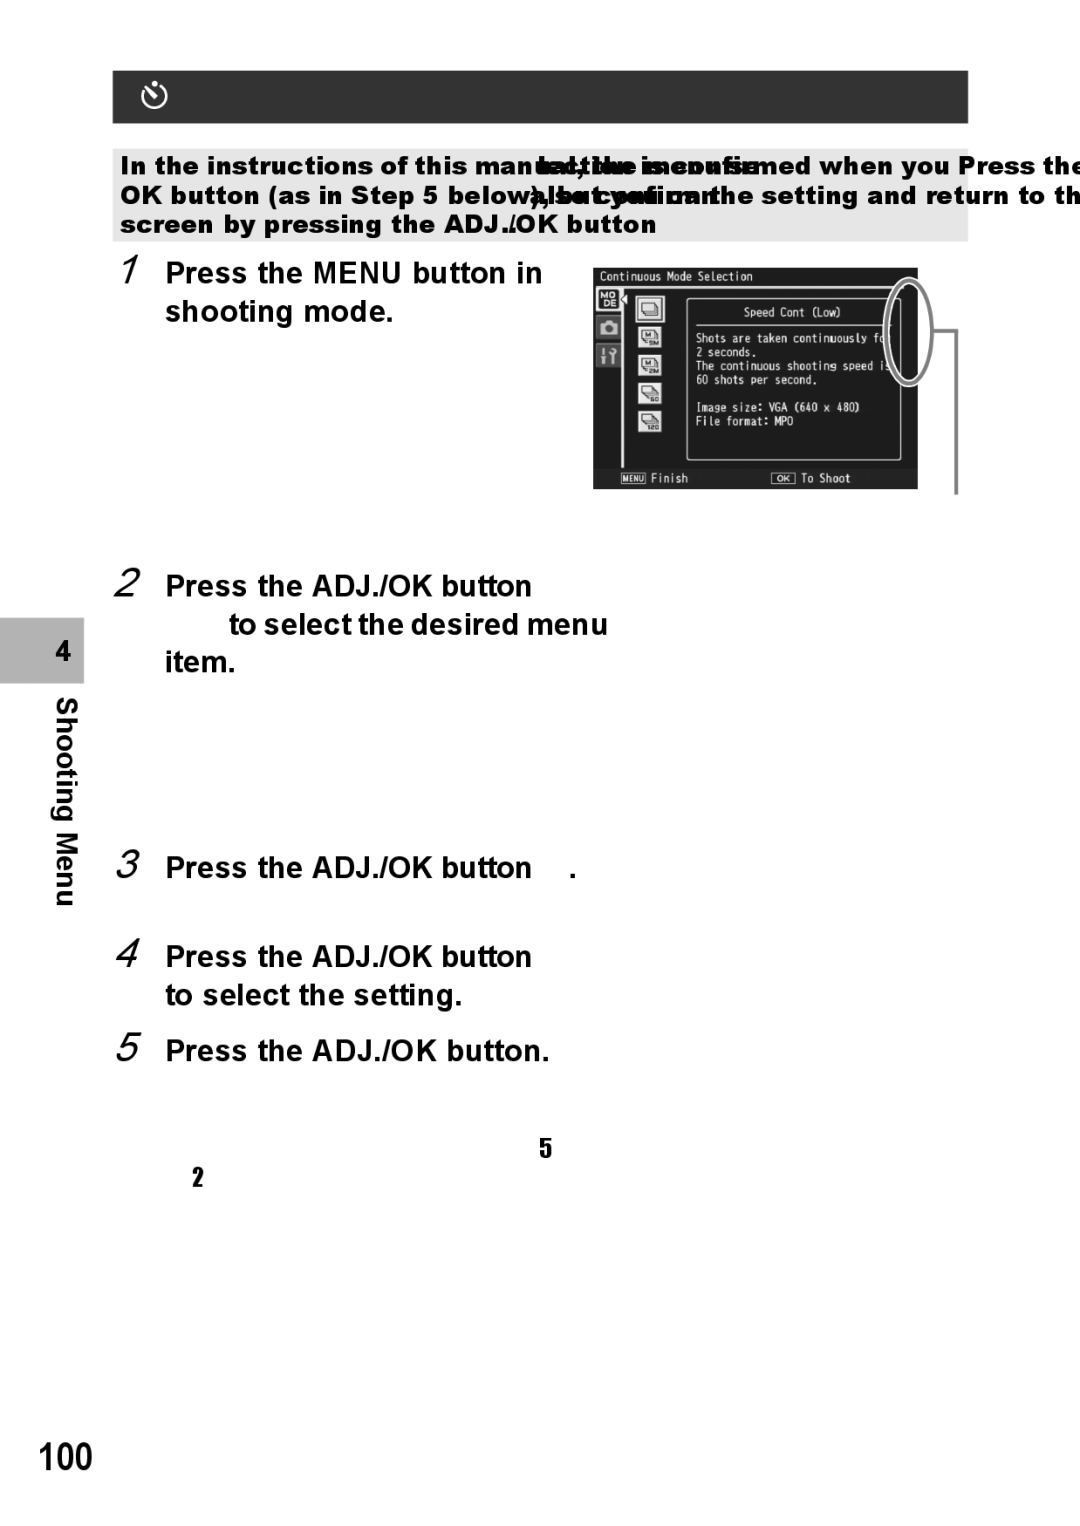 Samsung CX2 manual 100, Using the Menu, Press the Menu button in shooting mode, Press the ADJ./OK button $ 